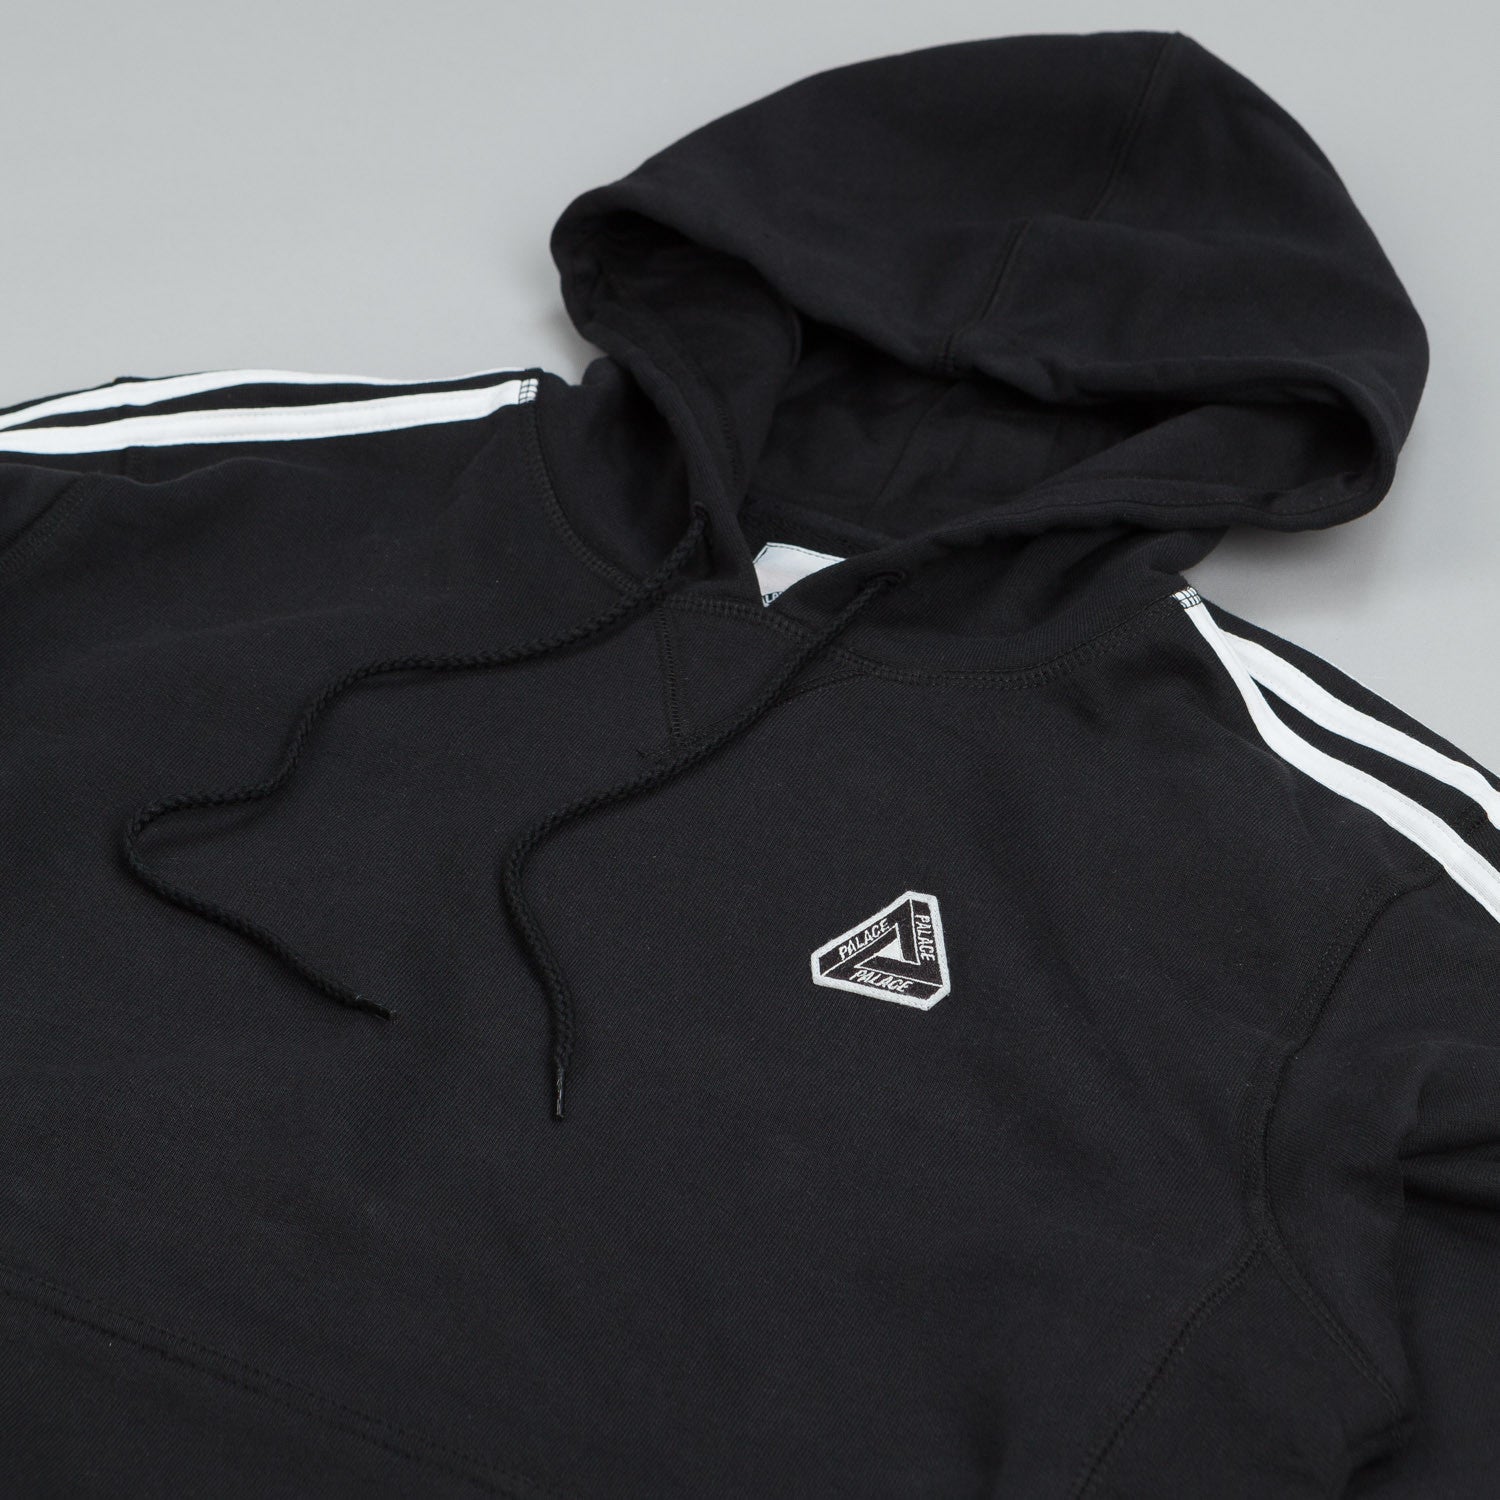 Adidas x Palace Hyper Hooded Sweatshirt Black | Flatspot